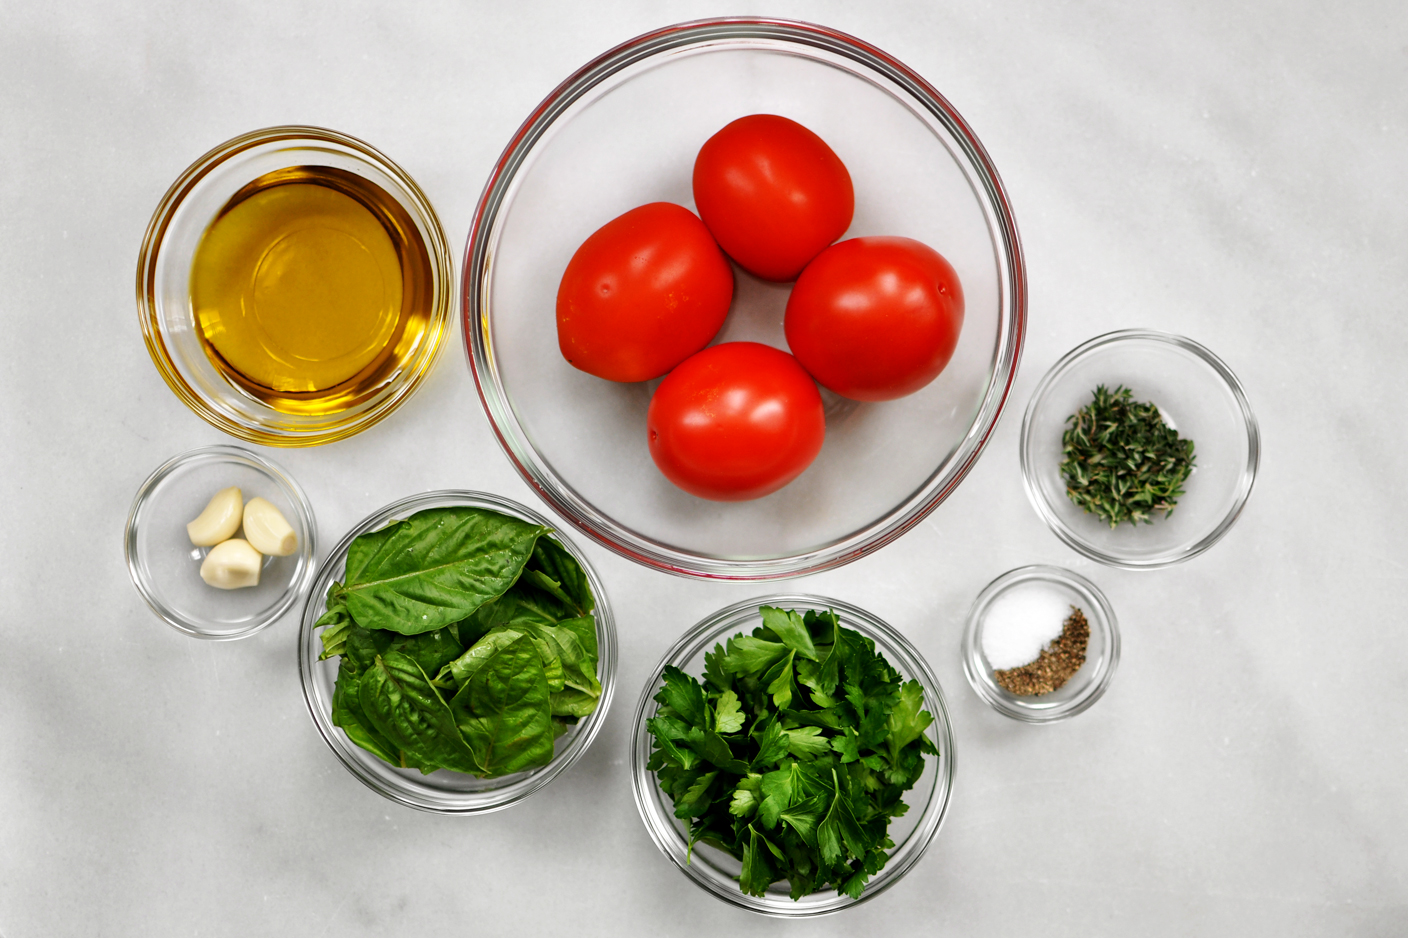 Pesto ingredients & tomatoes